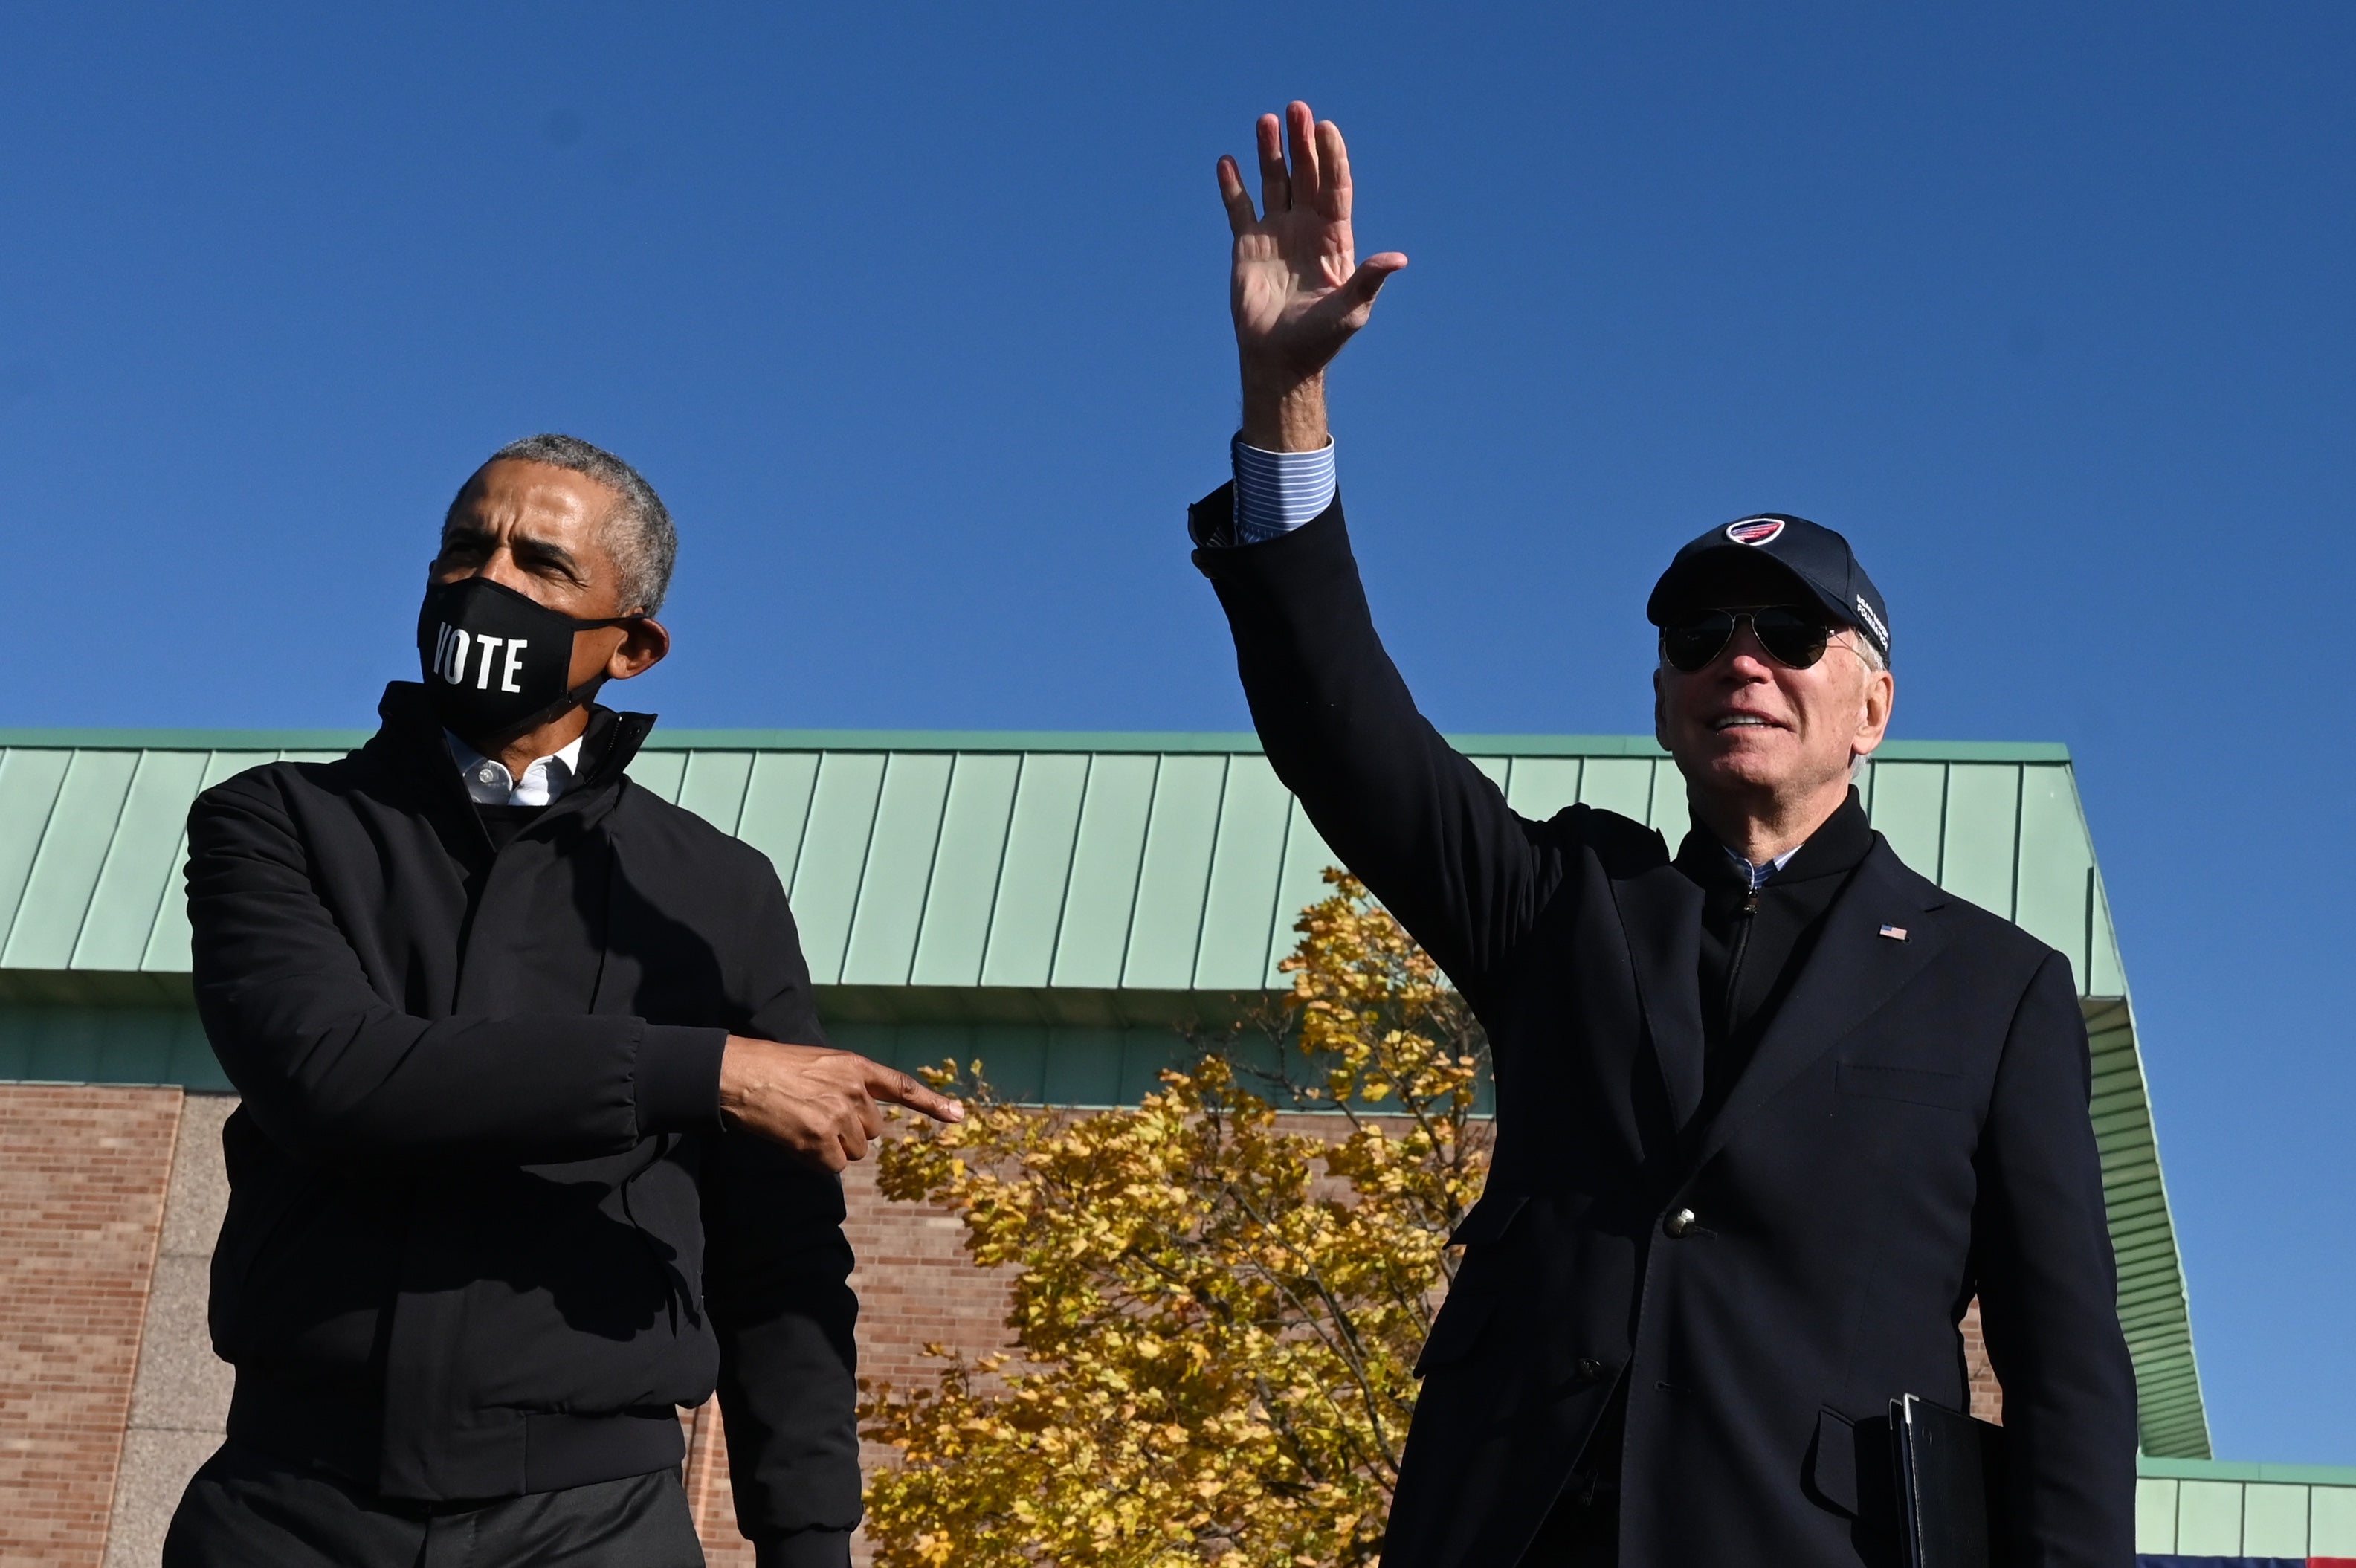 Barack Obama and Joe Biden on stage in Flint on Saturday